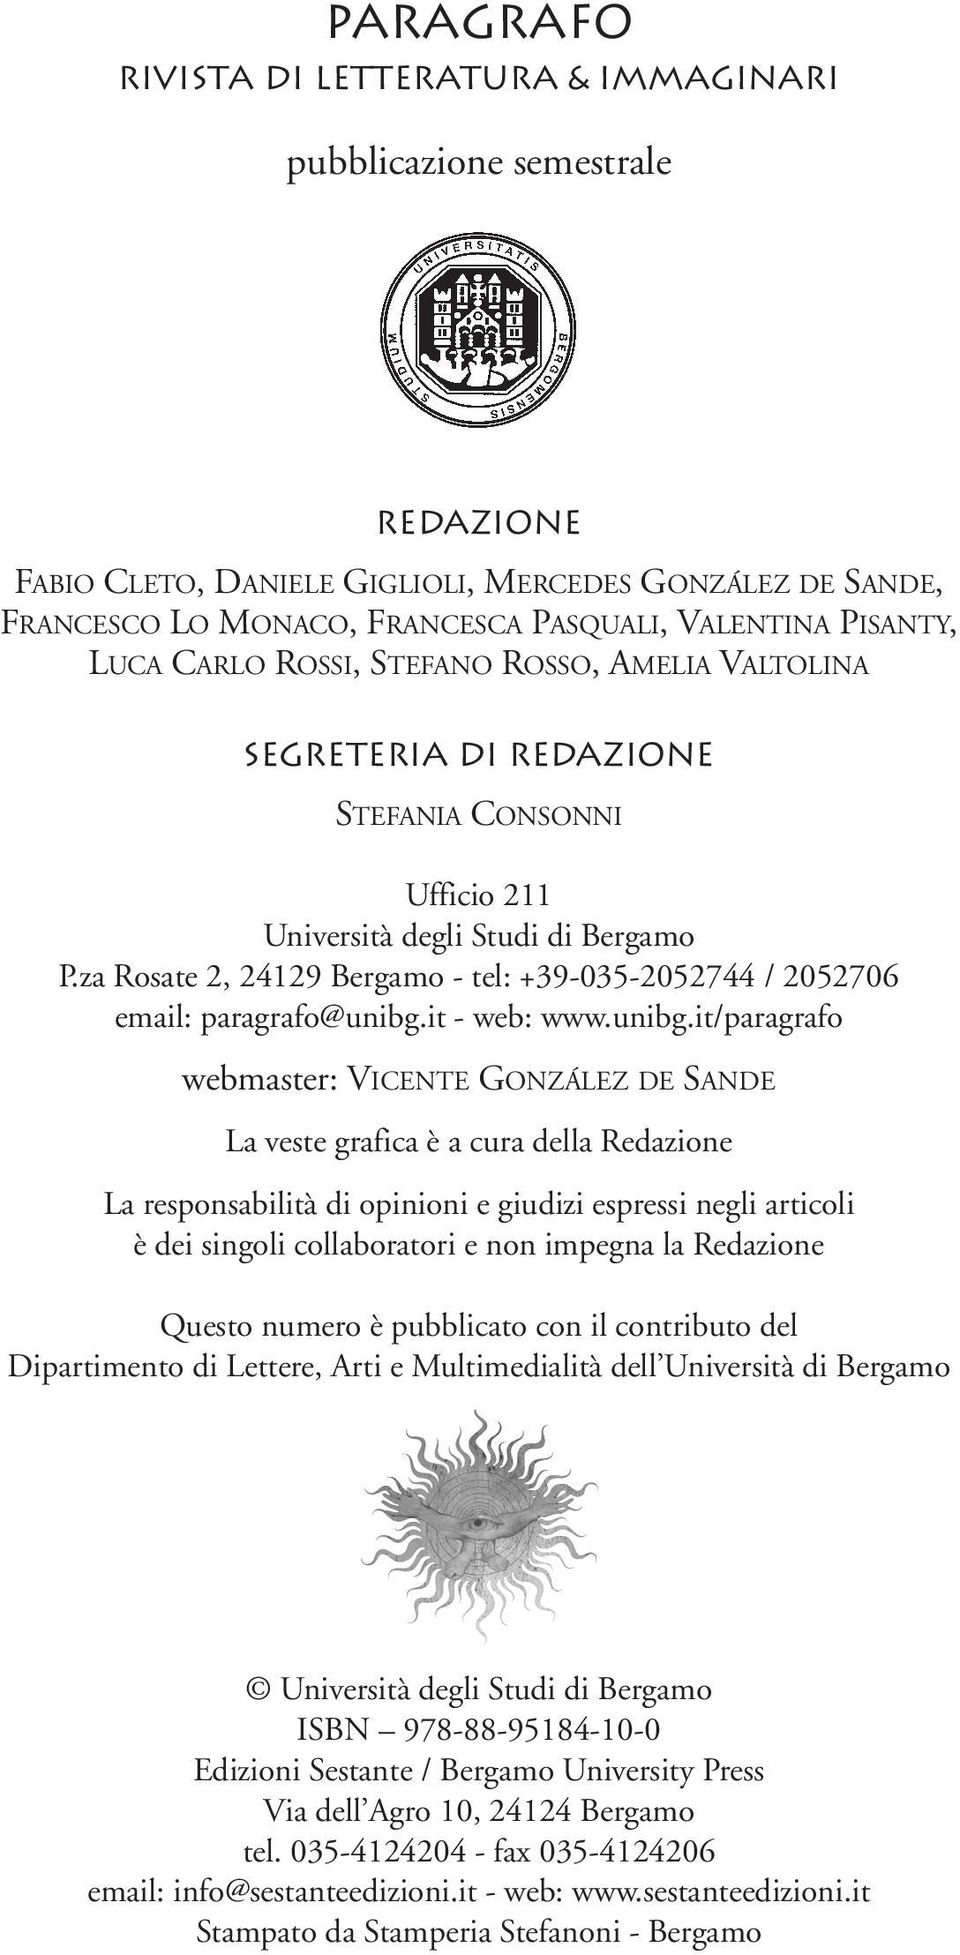 za Rosate 2, 24129 Bergamo - tel: +39-035-2052744 / 2052706 email: paragrafo@unibg.